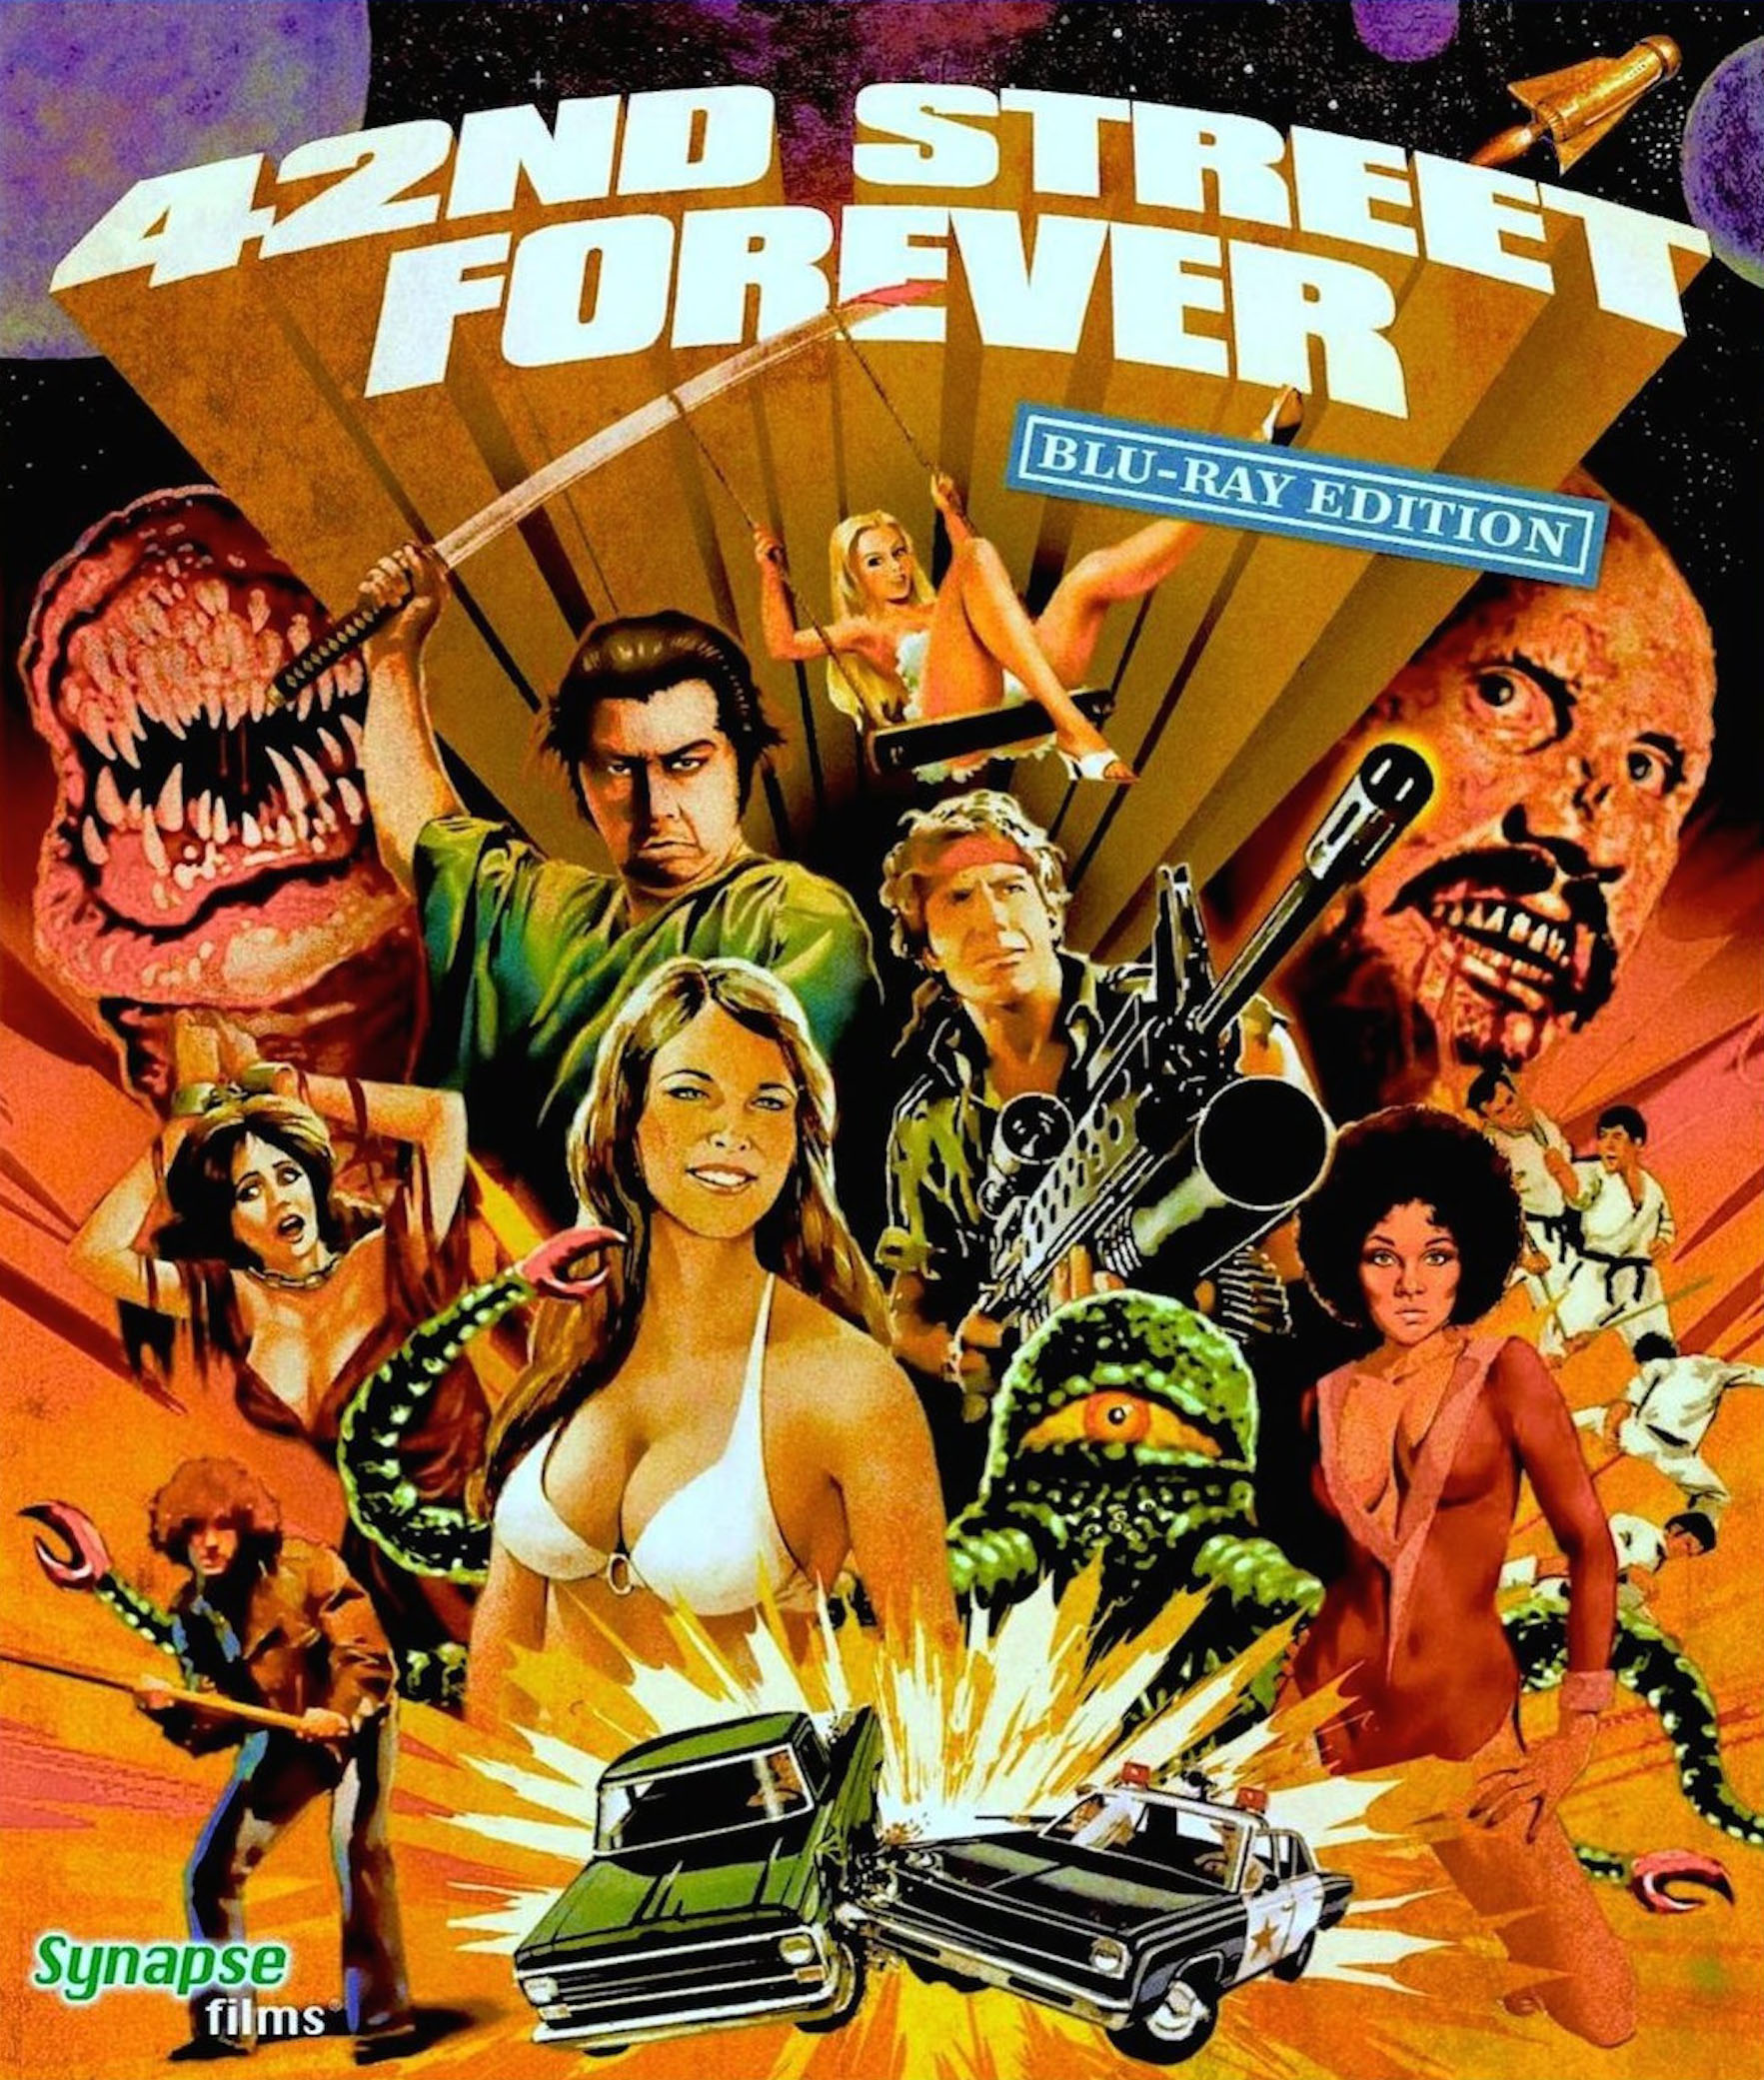 42nd Street Forever: Blu-ray Edition (2012) Screenshot 1 